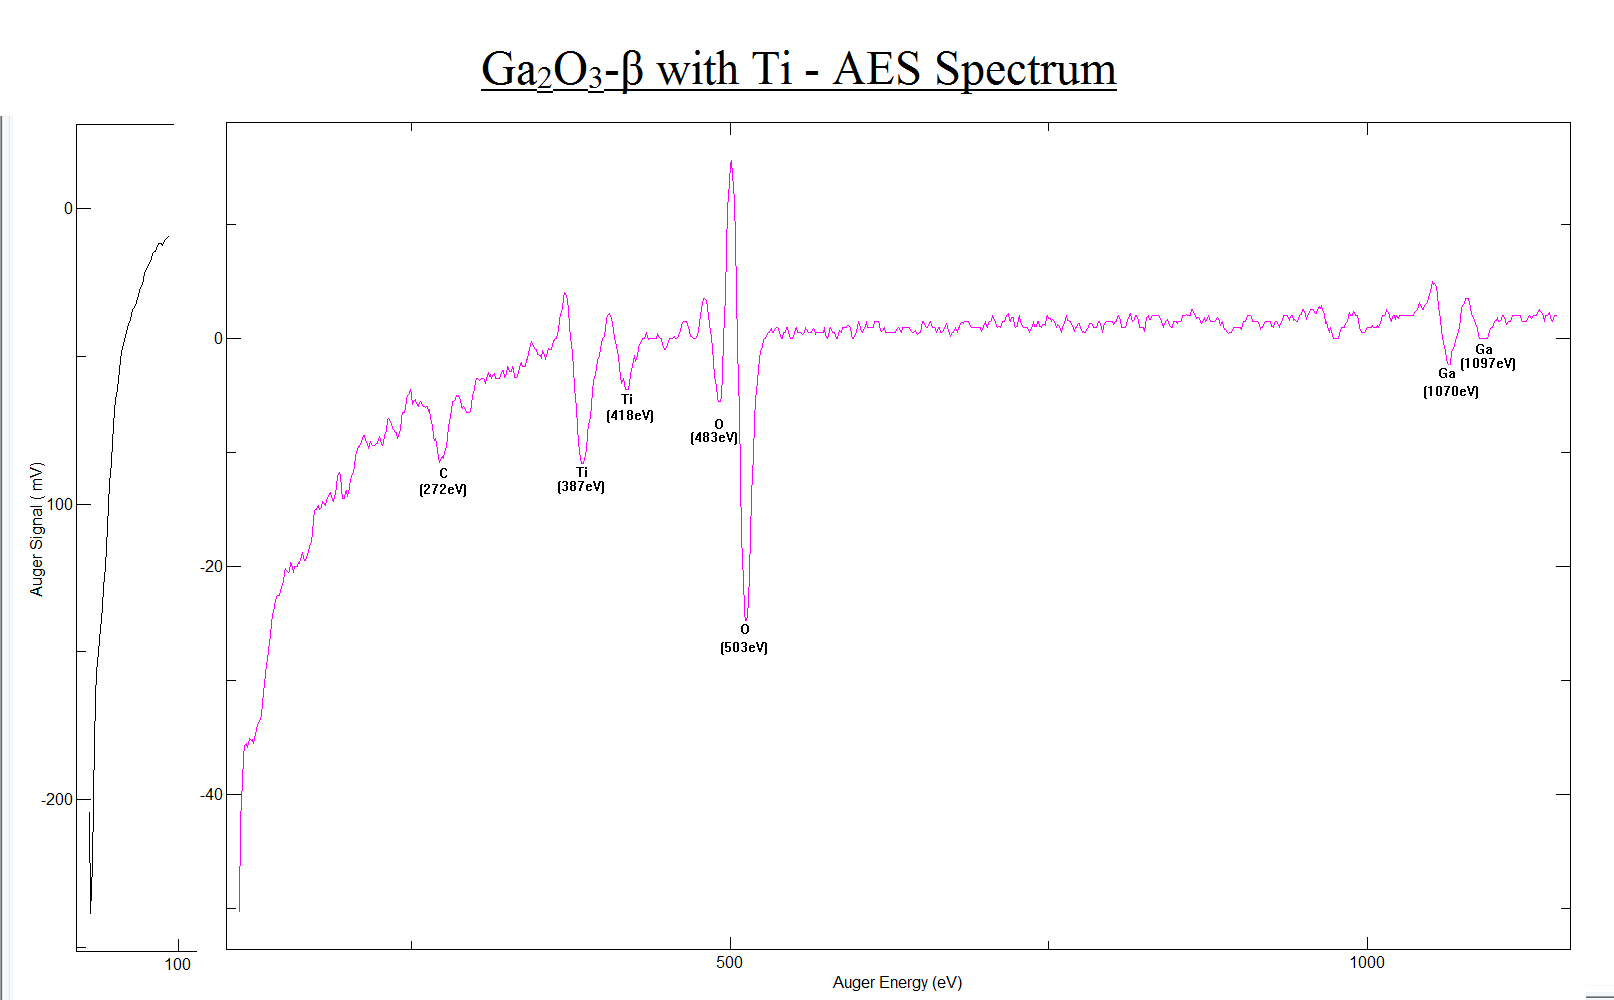 Ga2O3-β with TI - AES Spectrum